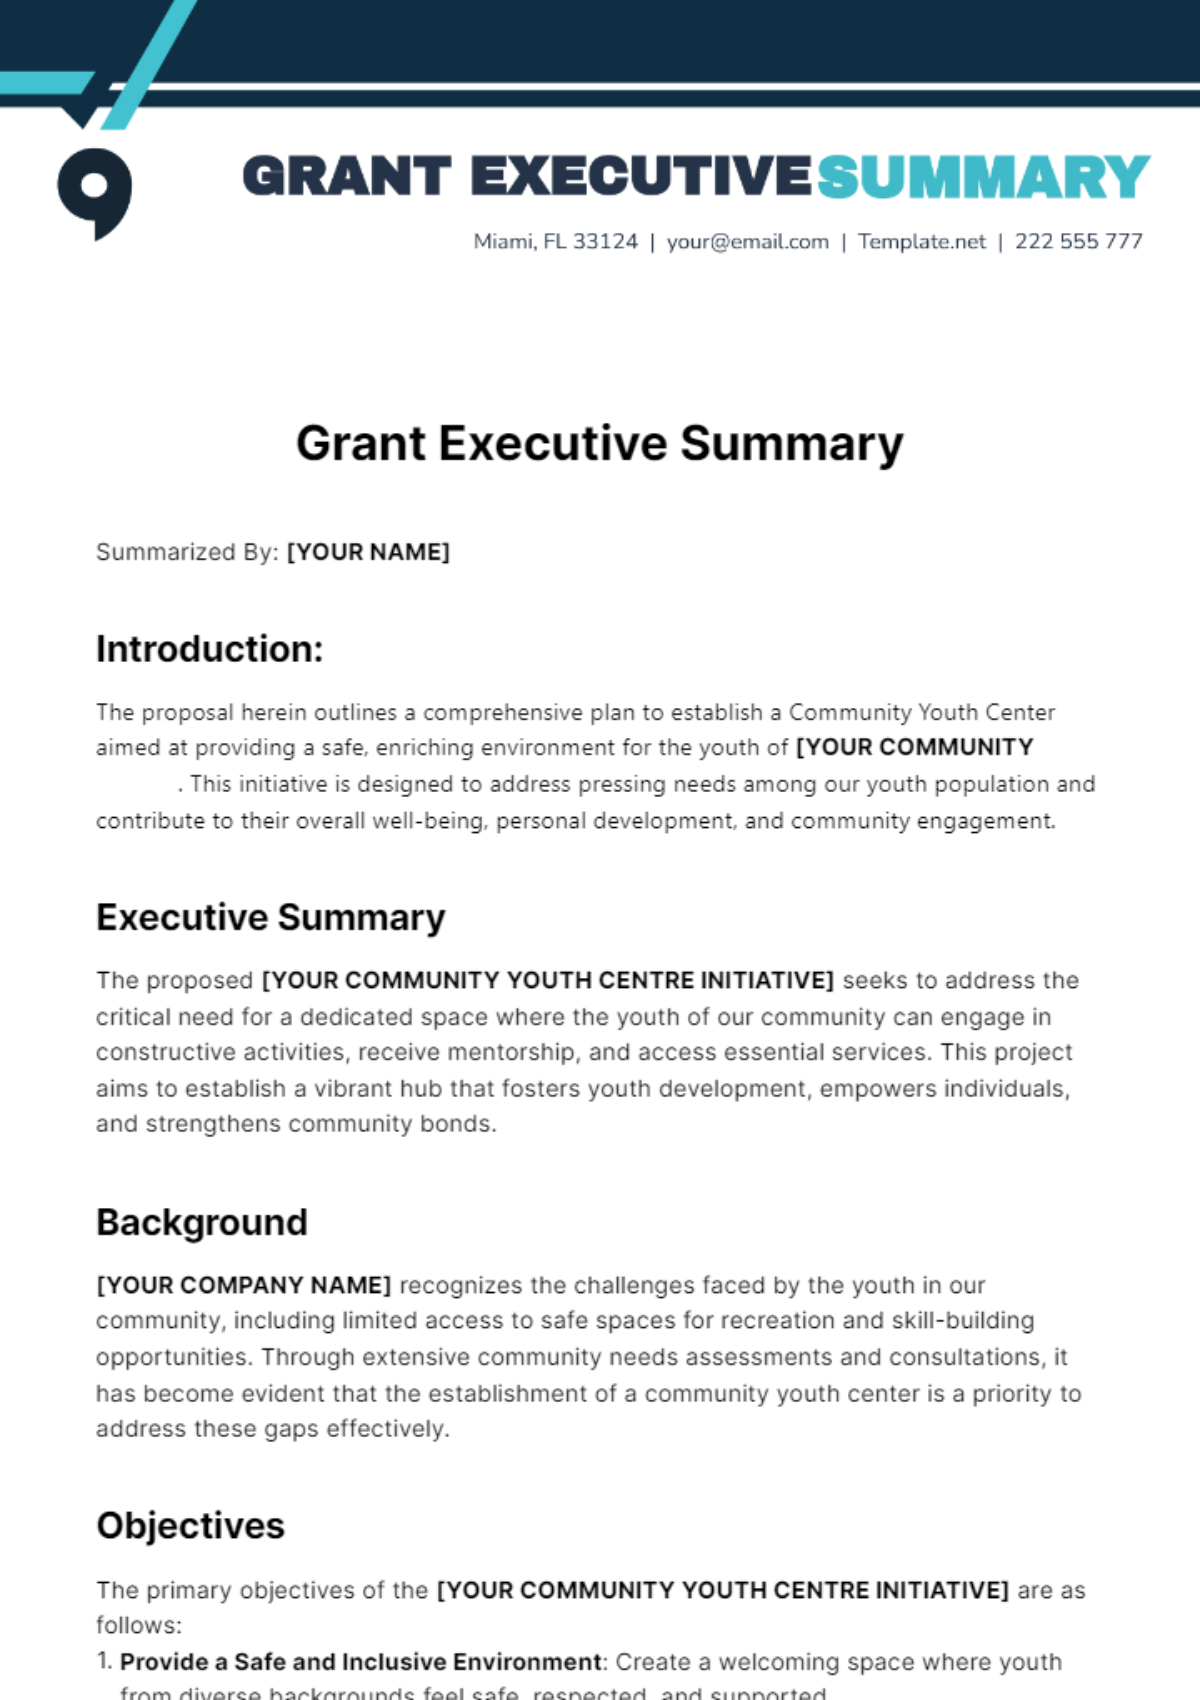 Grant Executive Summary Template